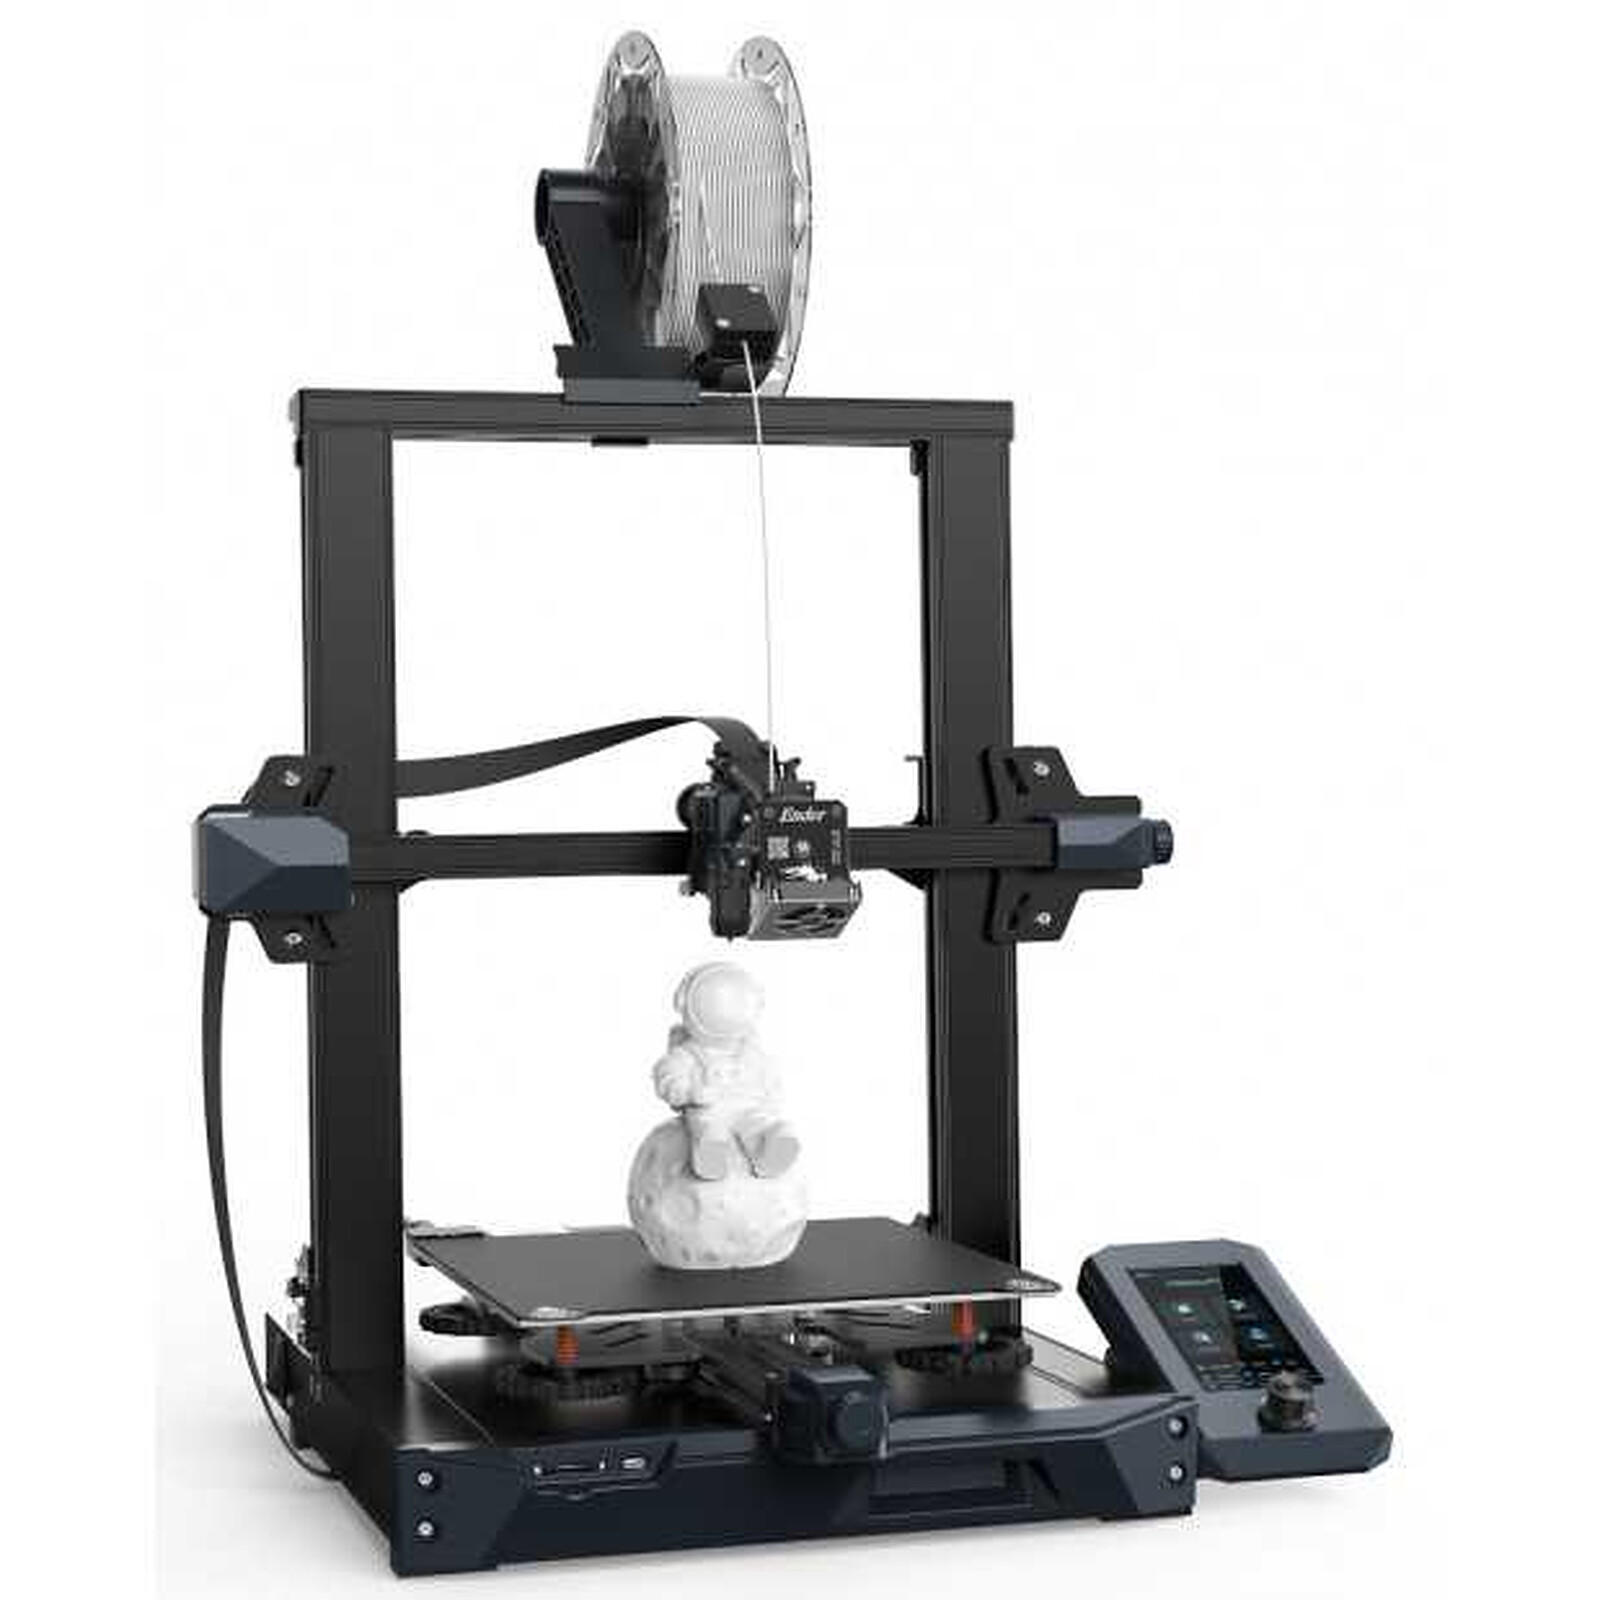 Creality Ender 3 S1 - Imprimante 3D - Garantie 3 ans LDLC